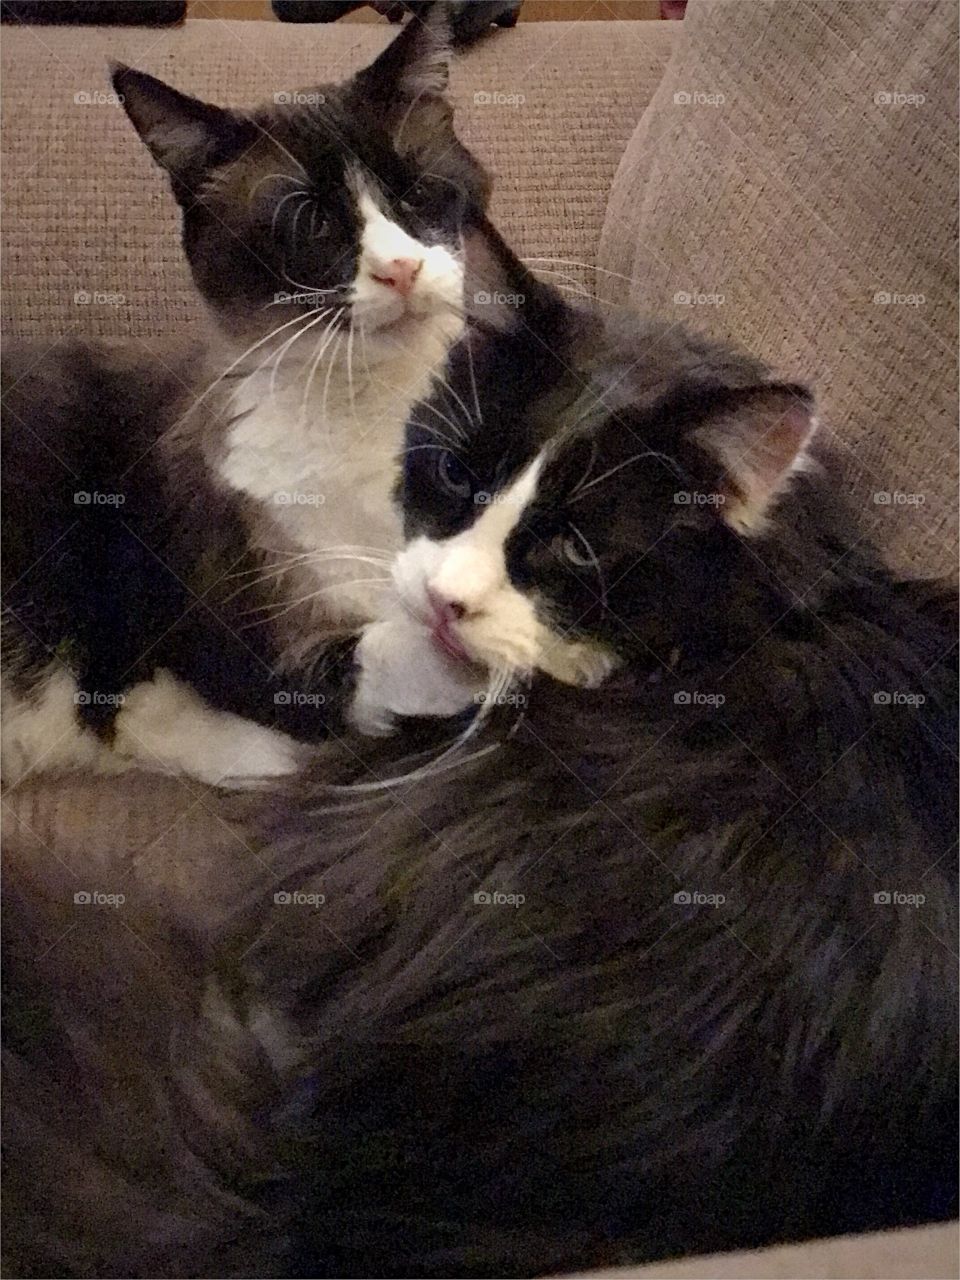 Fluffy cats